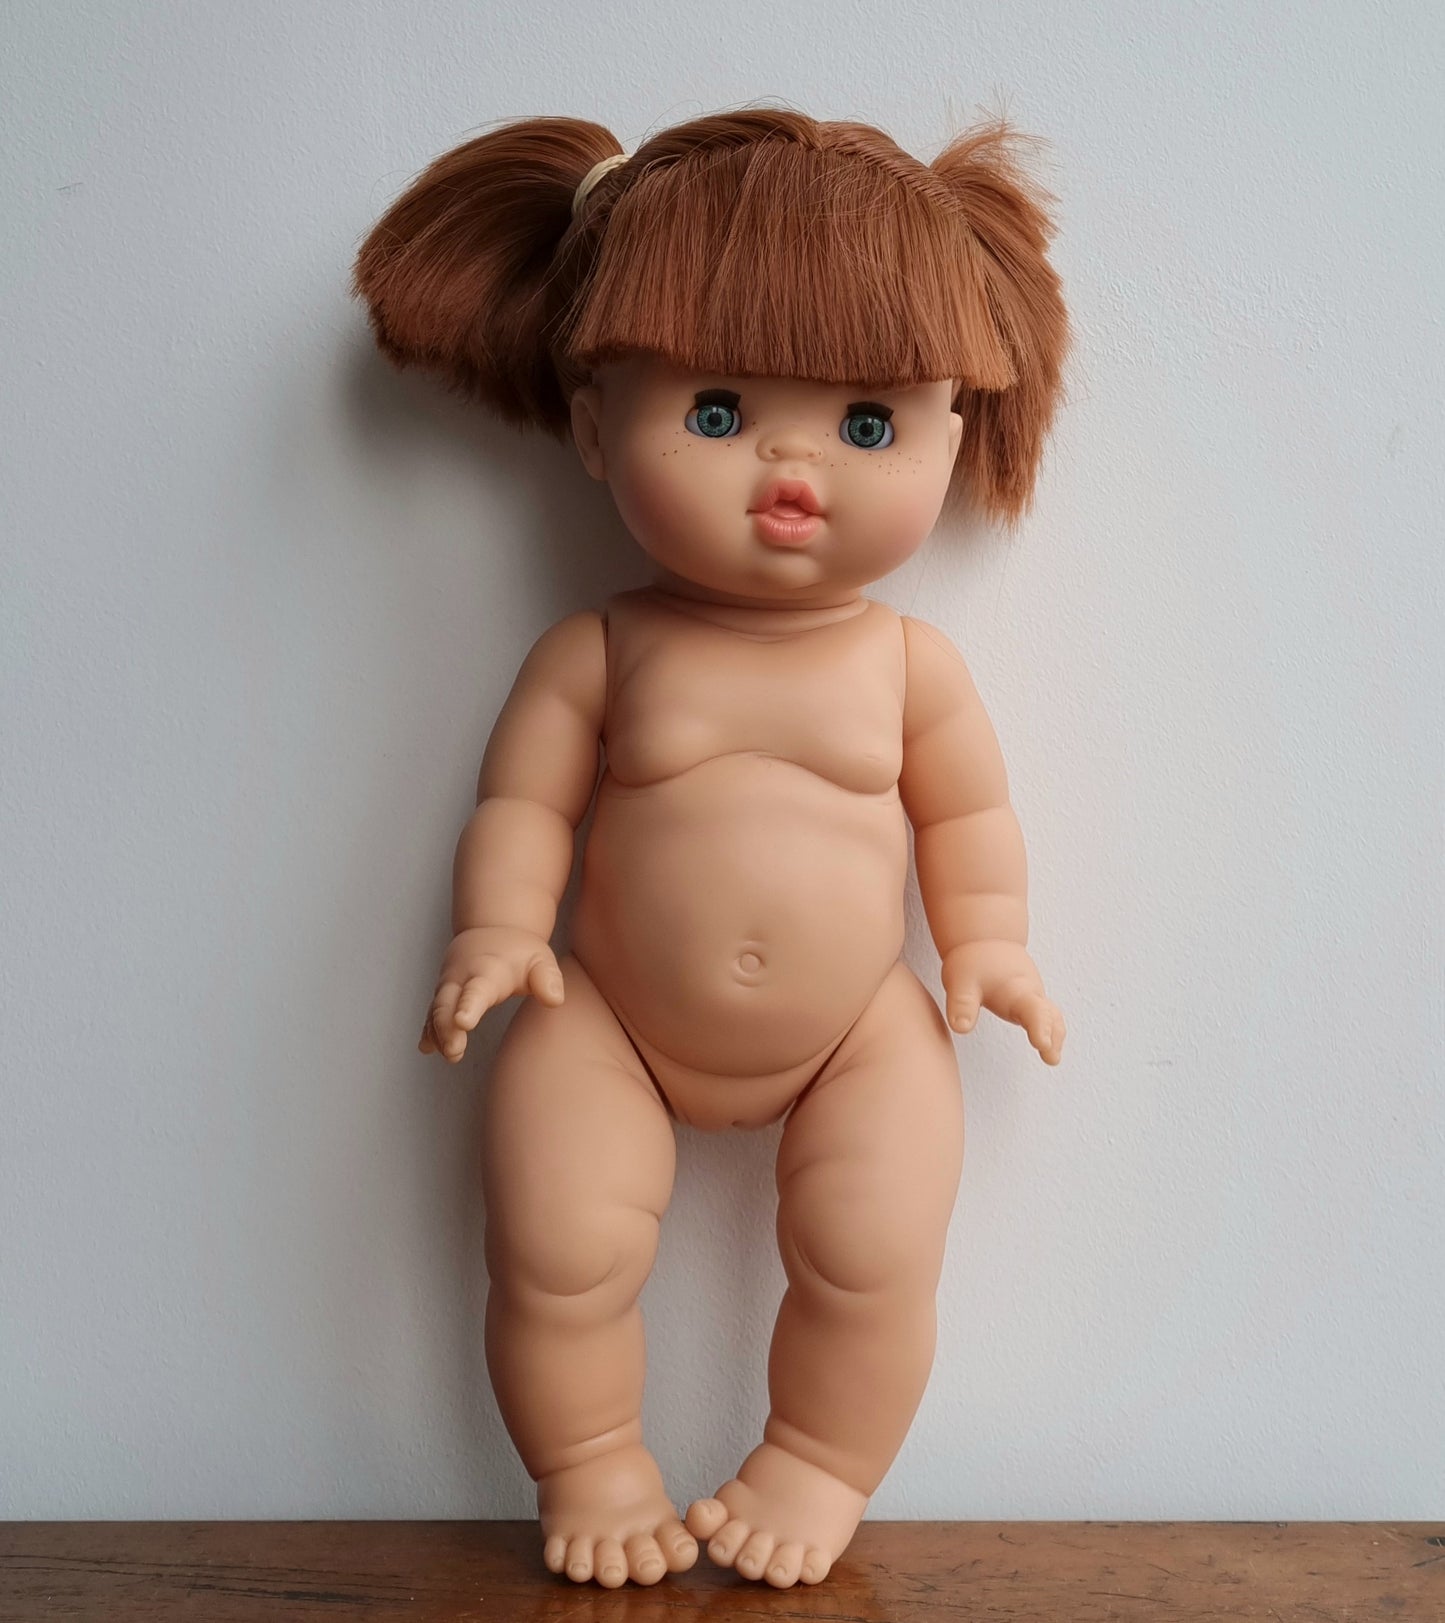 Toddler doll